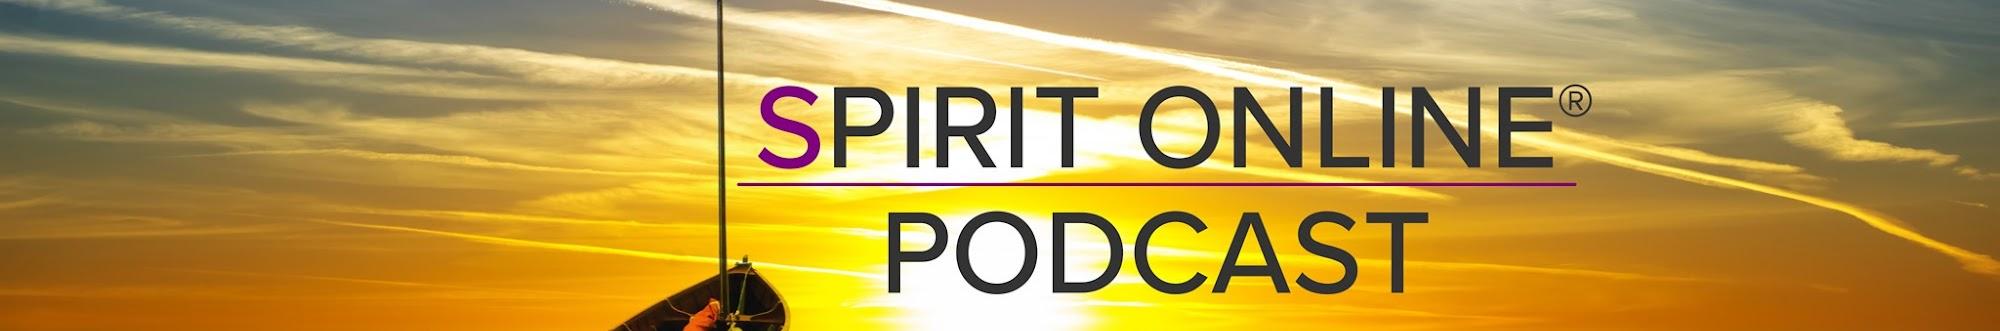 Spirit Online Podcast